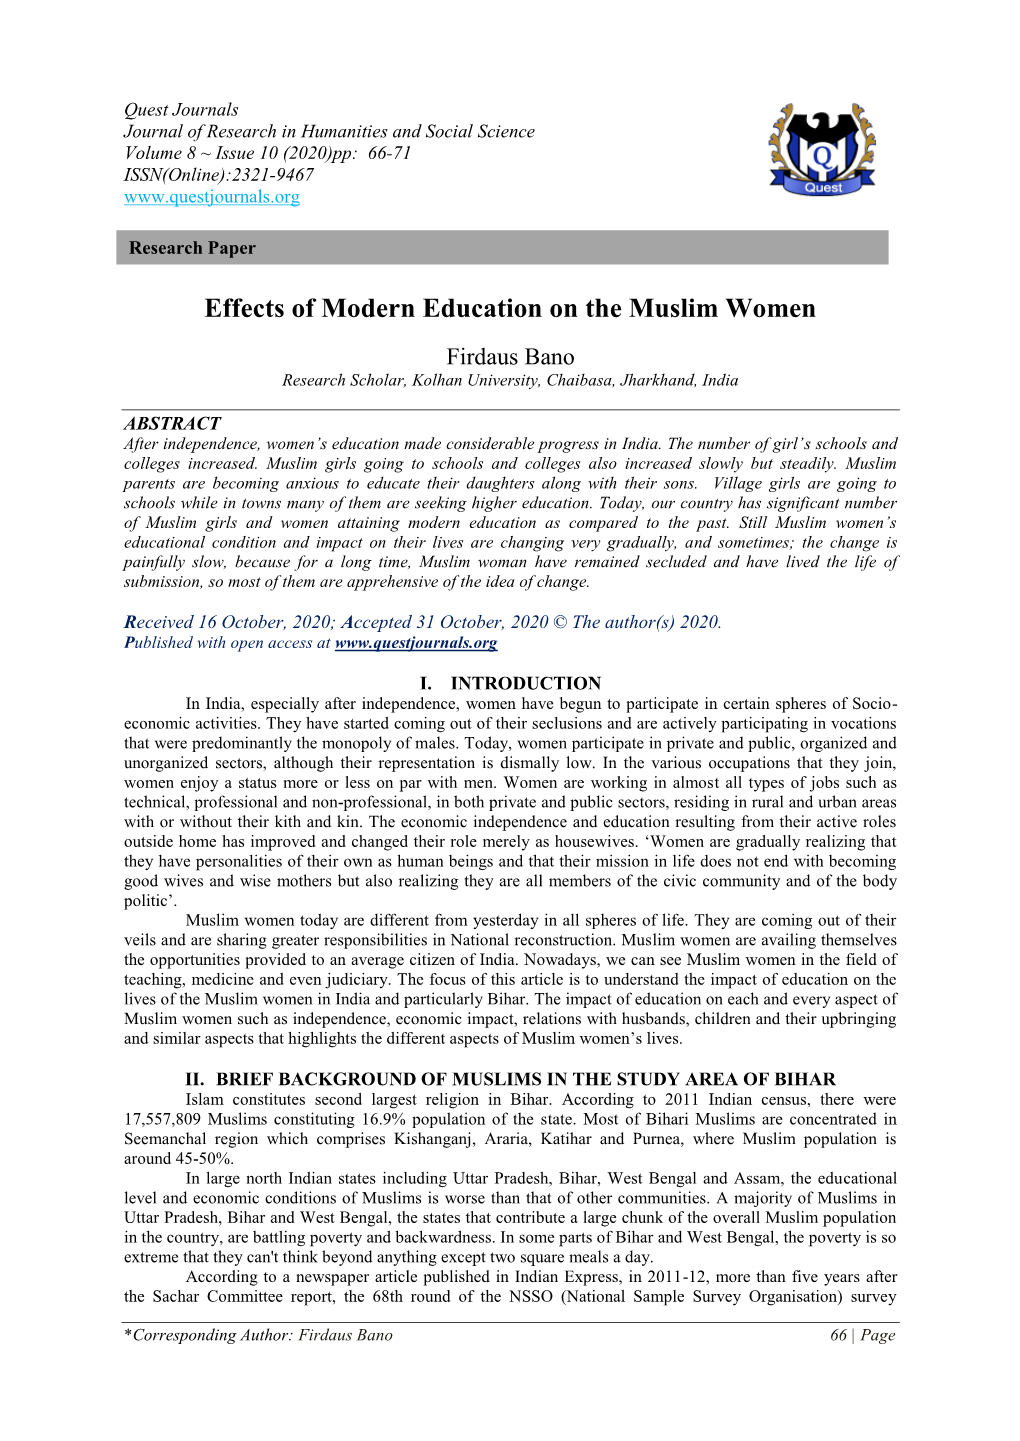 Effects of Modern Education on the Muslim Women